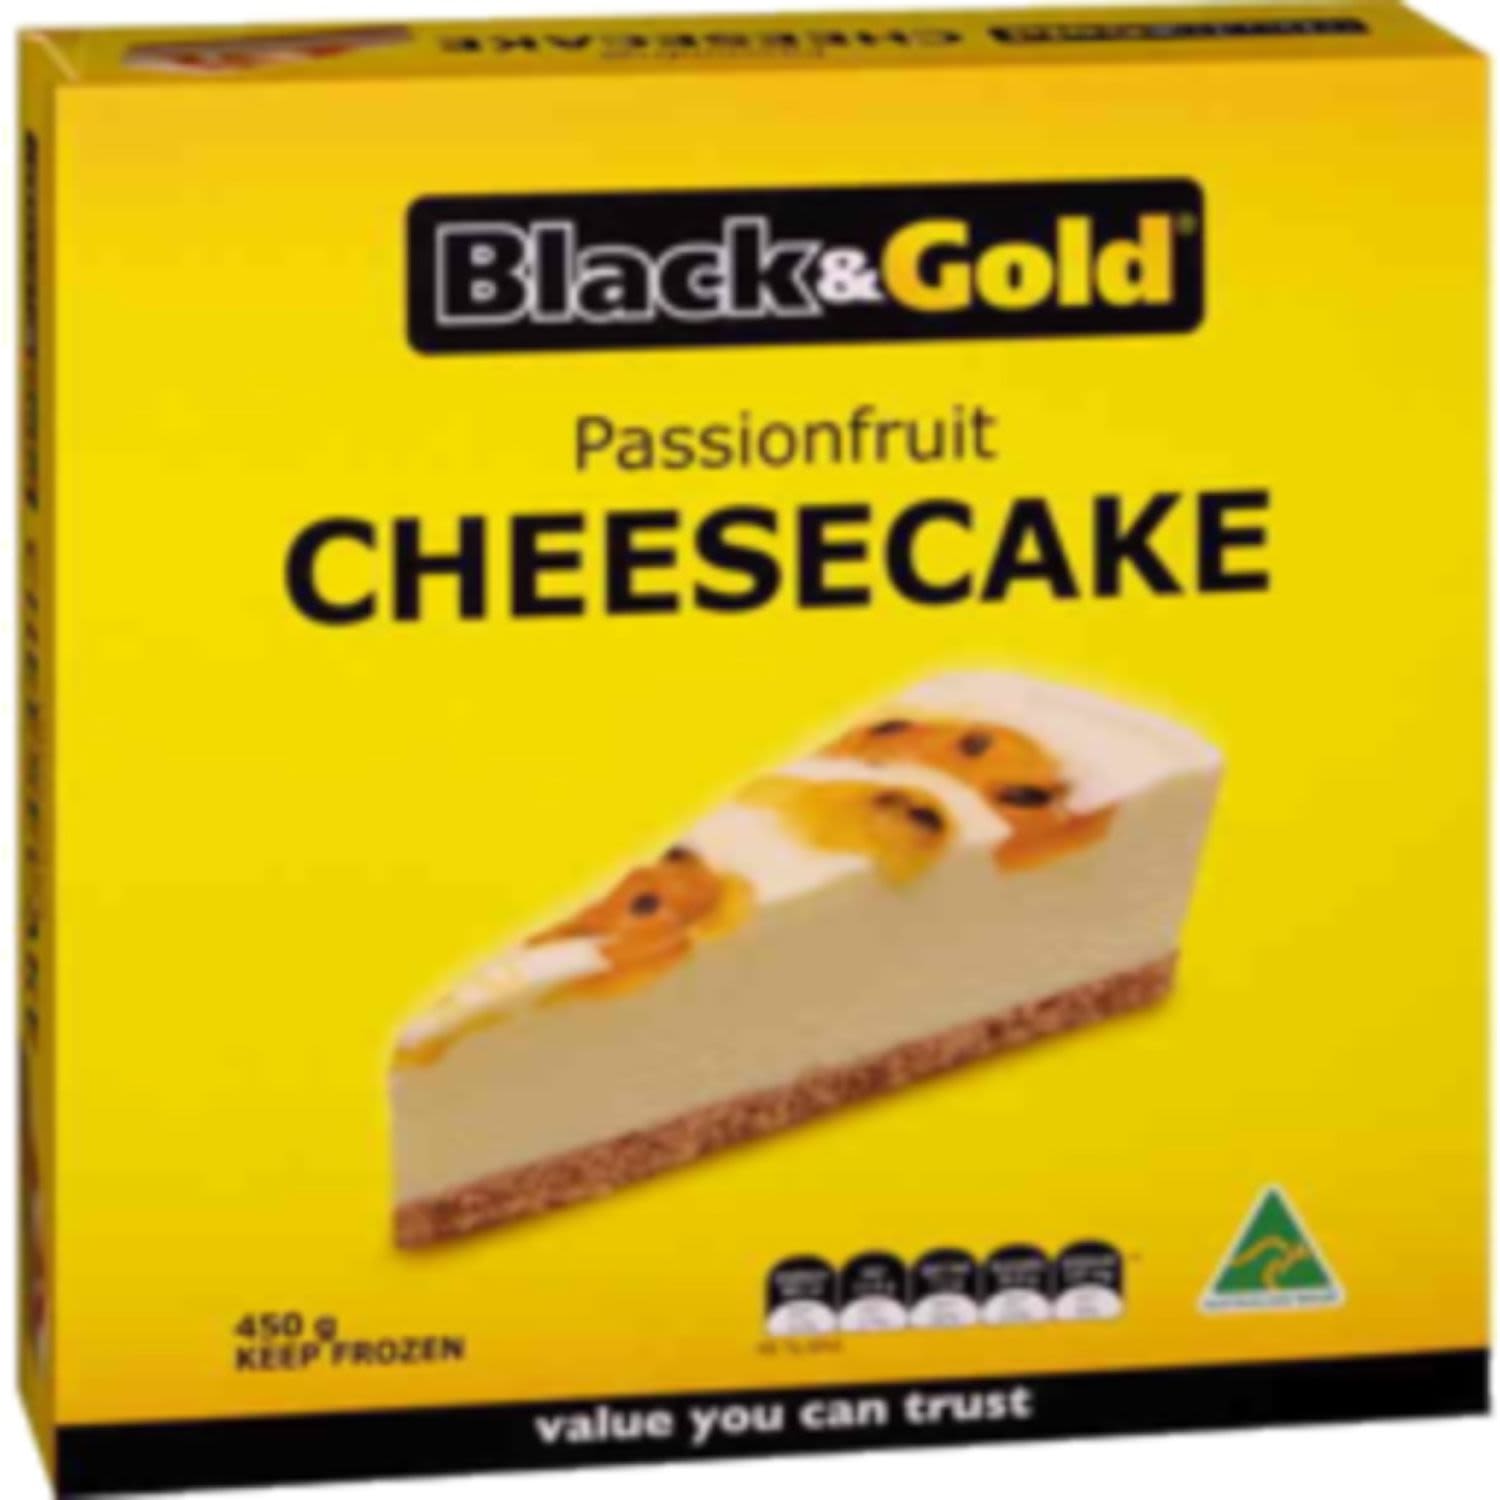 Black & Gold Passion Fruit Cheesecake, 450 Gram